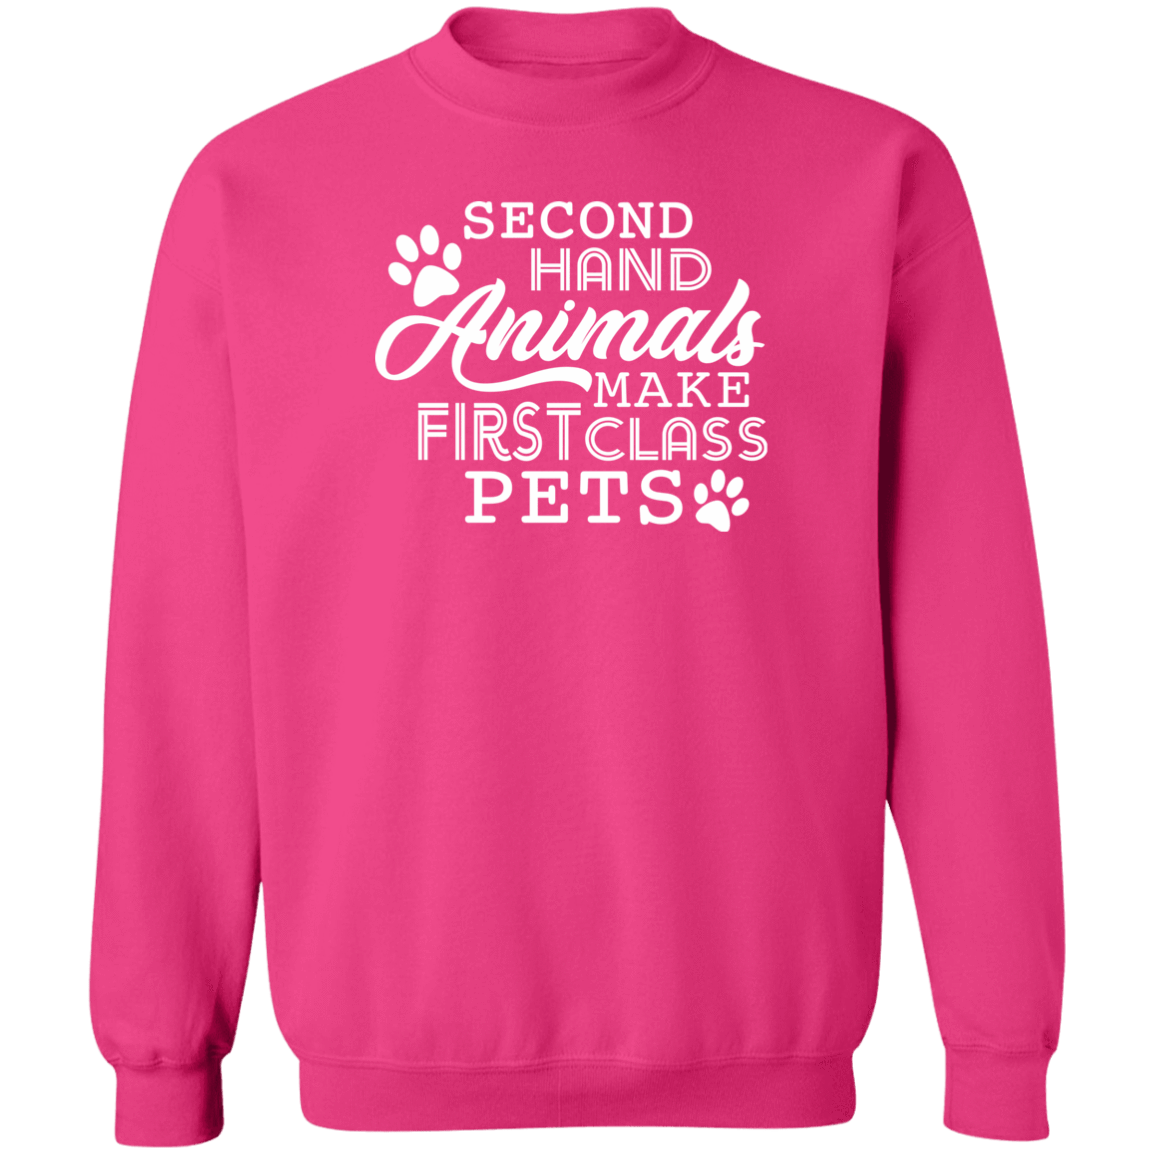 Second Hand Animals - Sweatshirt.